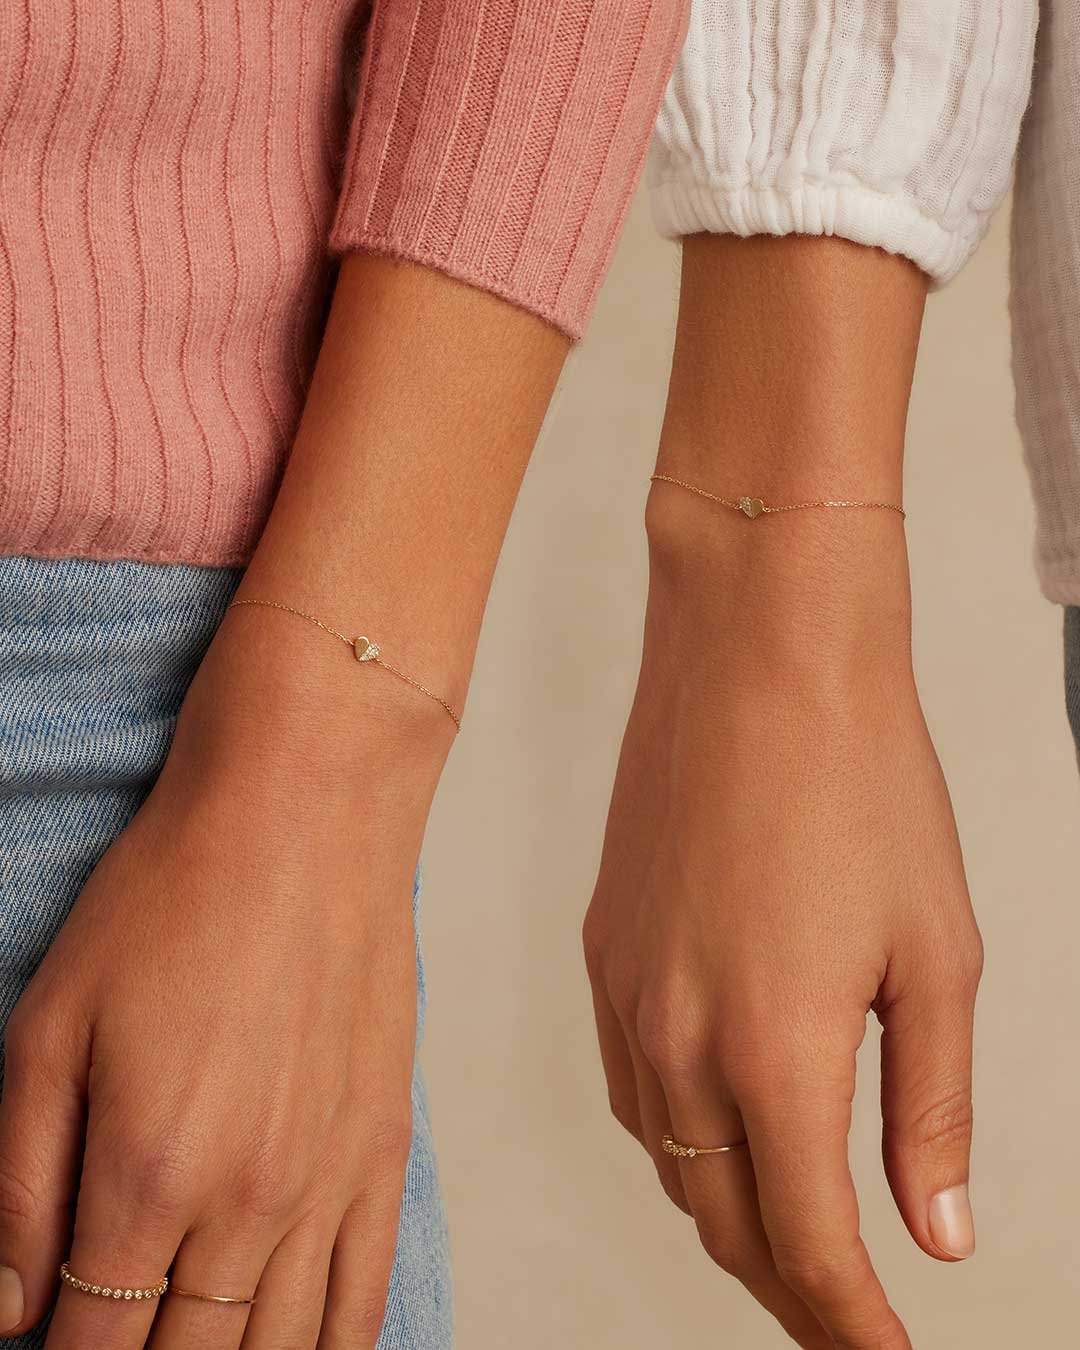 Two women wearing matching diamond heart bracelets. 